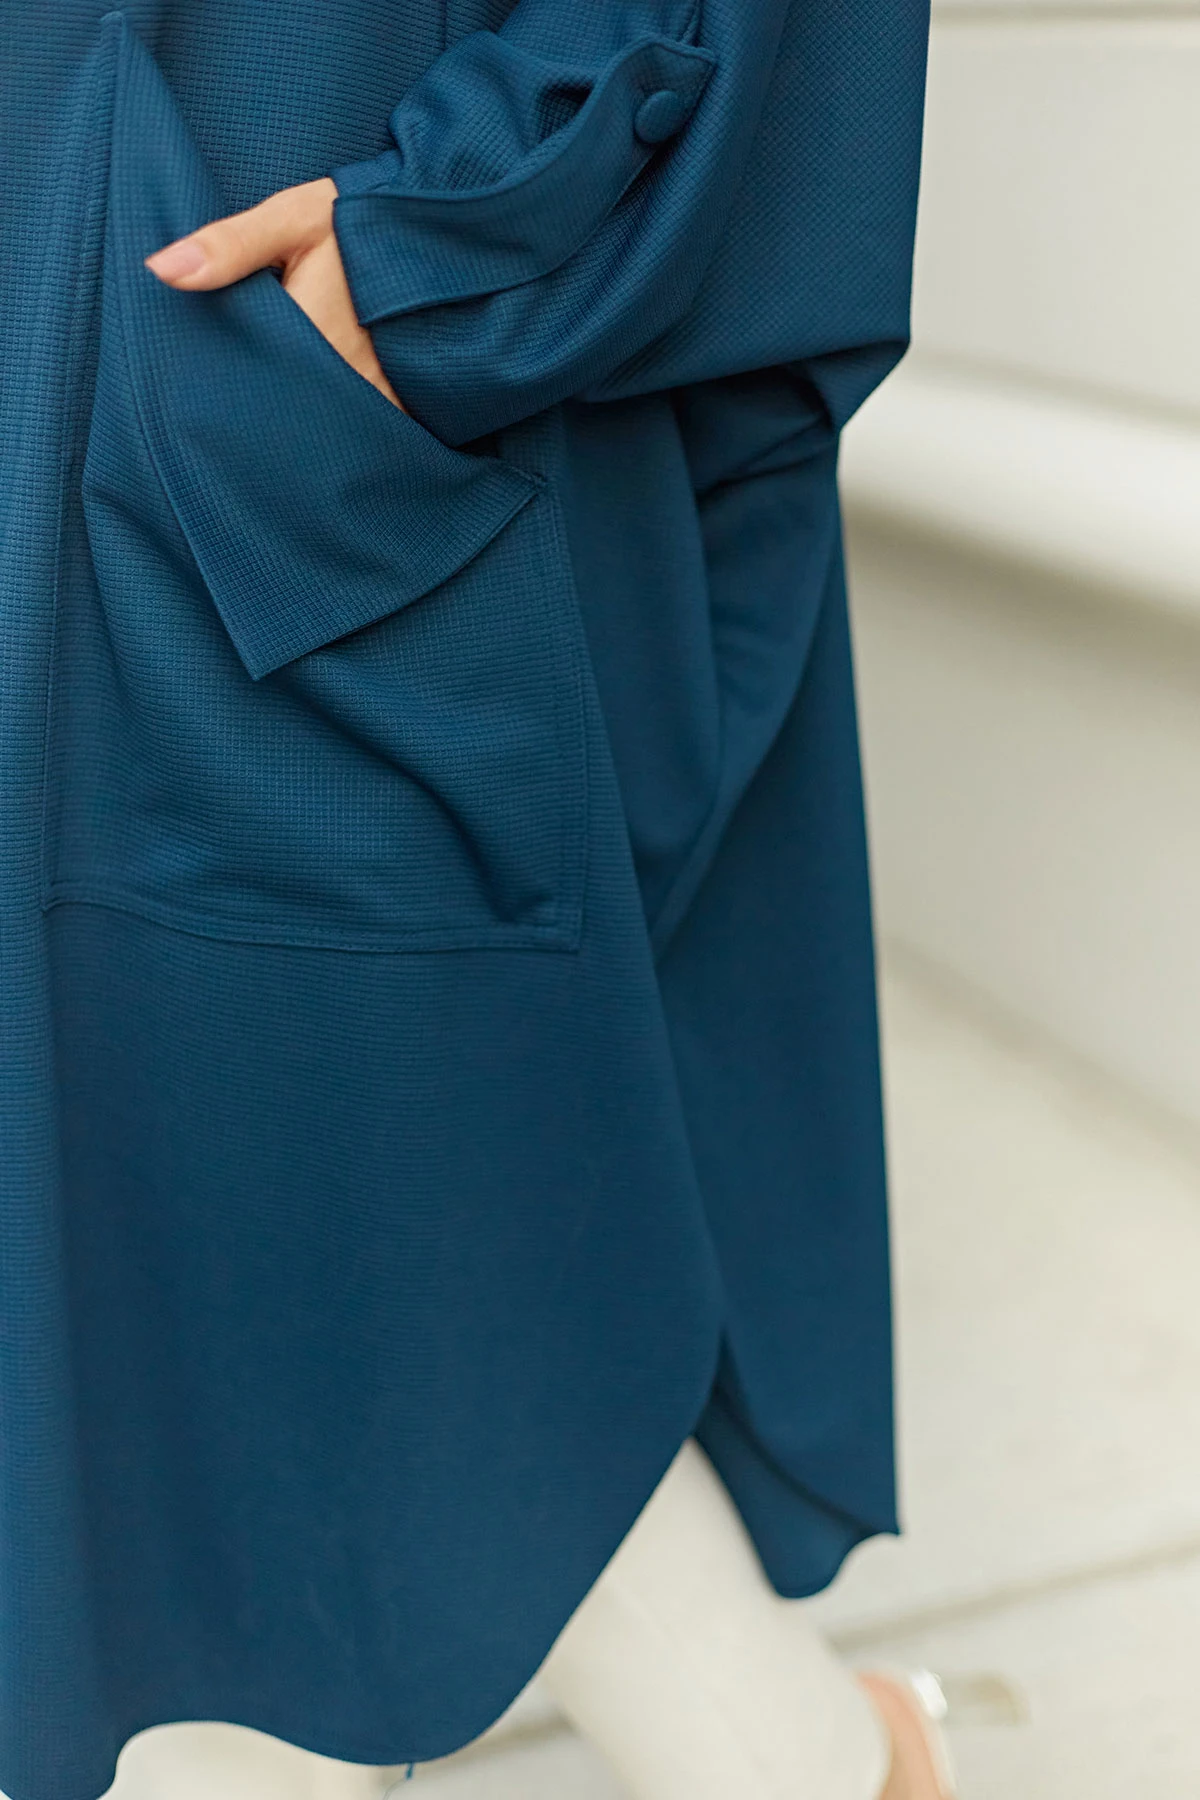 

Zippered Bat Sleeves Cape Hooded Pocket Unlined Shabby Long Sleeve Zero Collar Cotton Fabric Women Muslim Fashion Hijab Seasonal